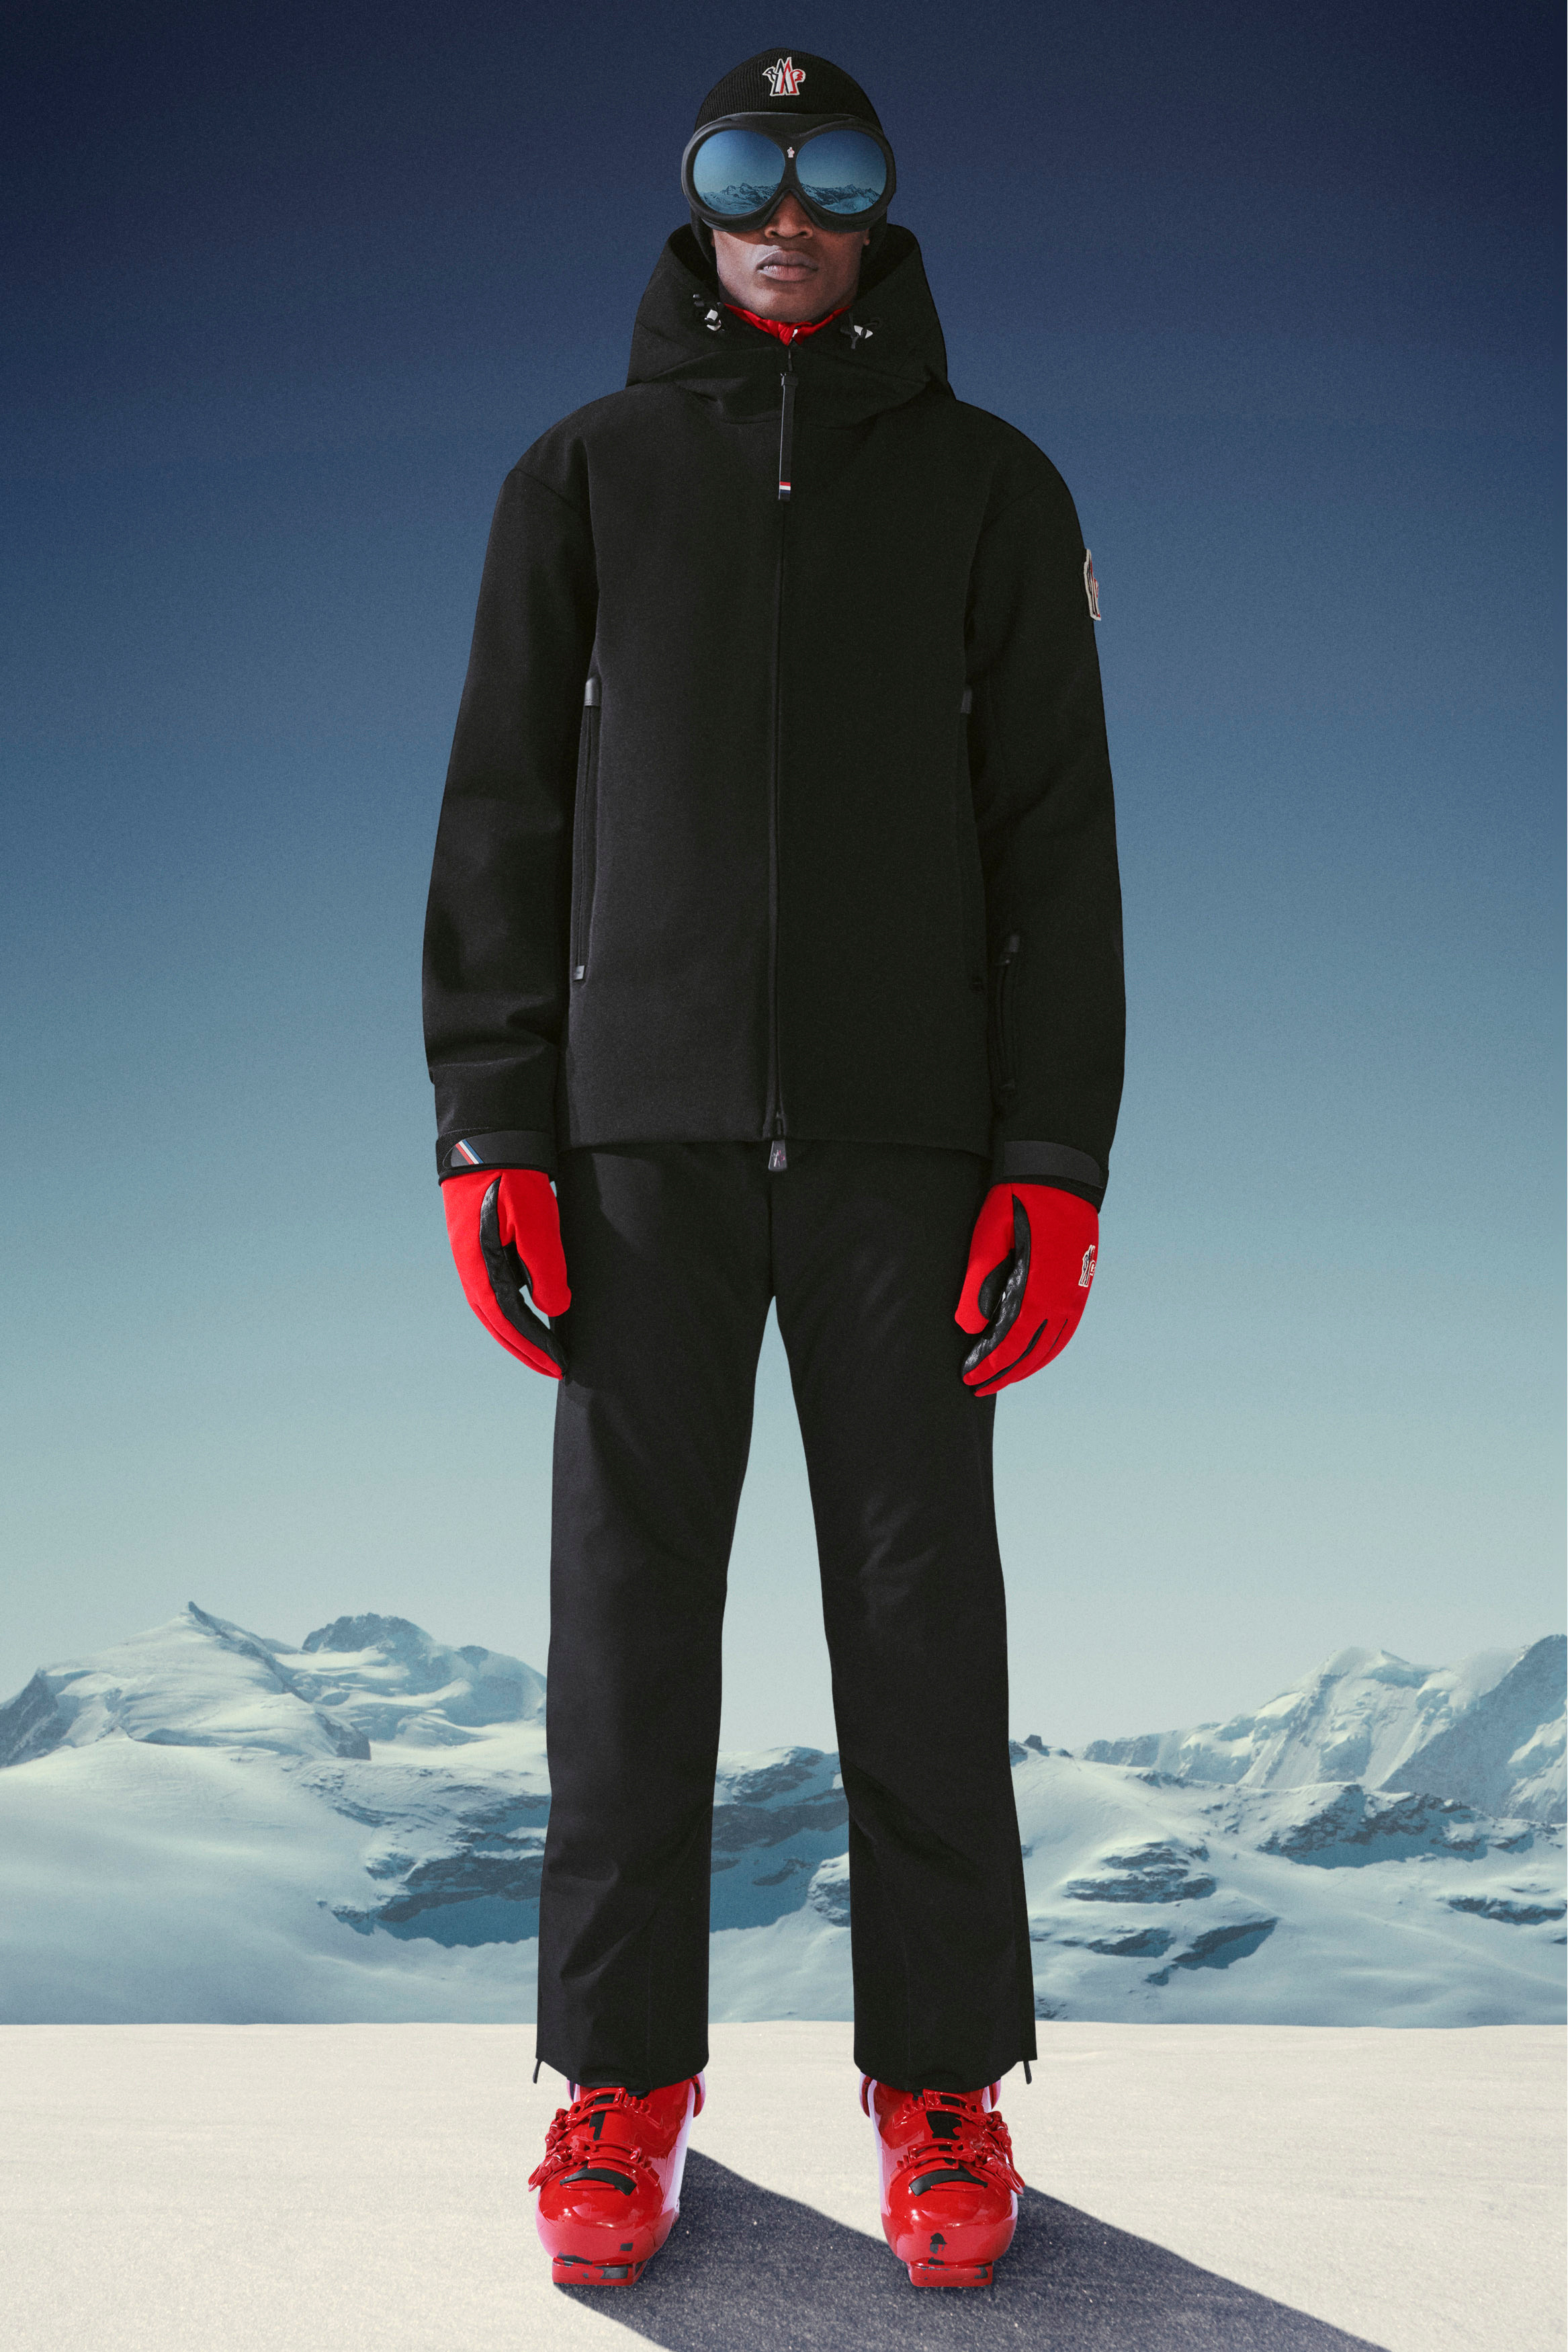 moncler praz ski jacket,OFF 71%,www.concordehotels.com.tr